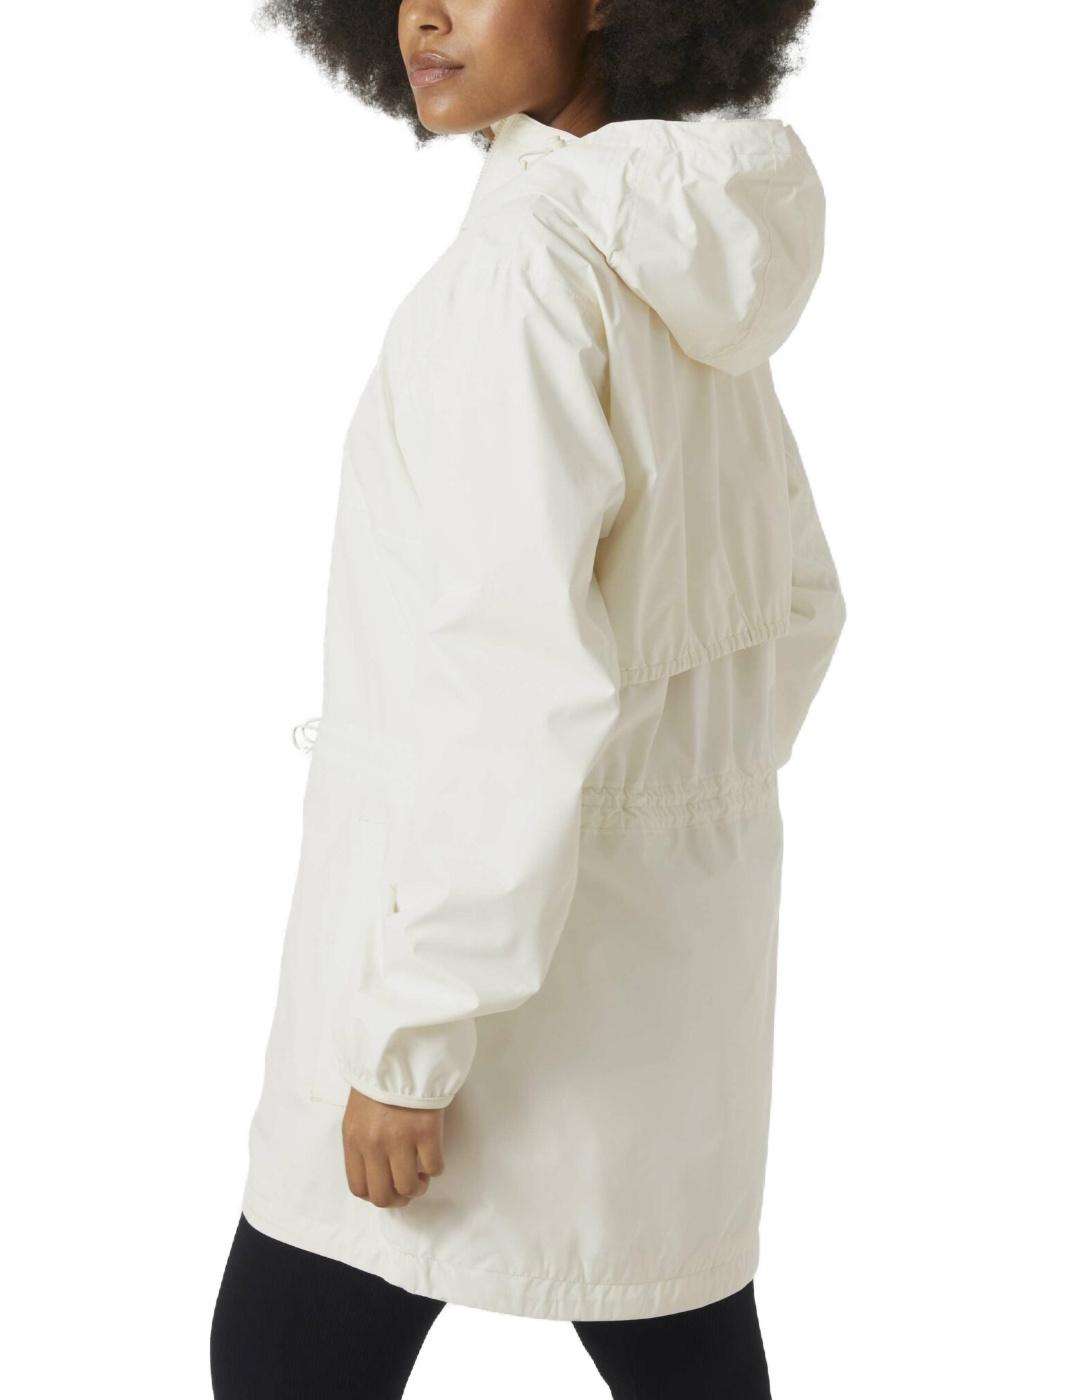 Chubasquero Helly Hansen Essence blanco con capucha de mujer